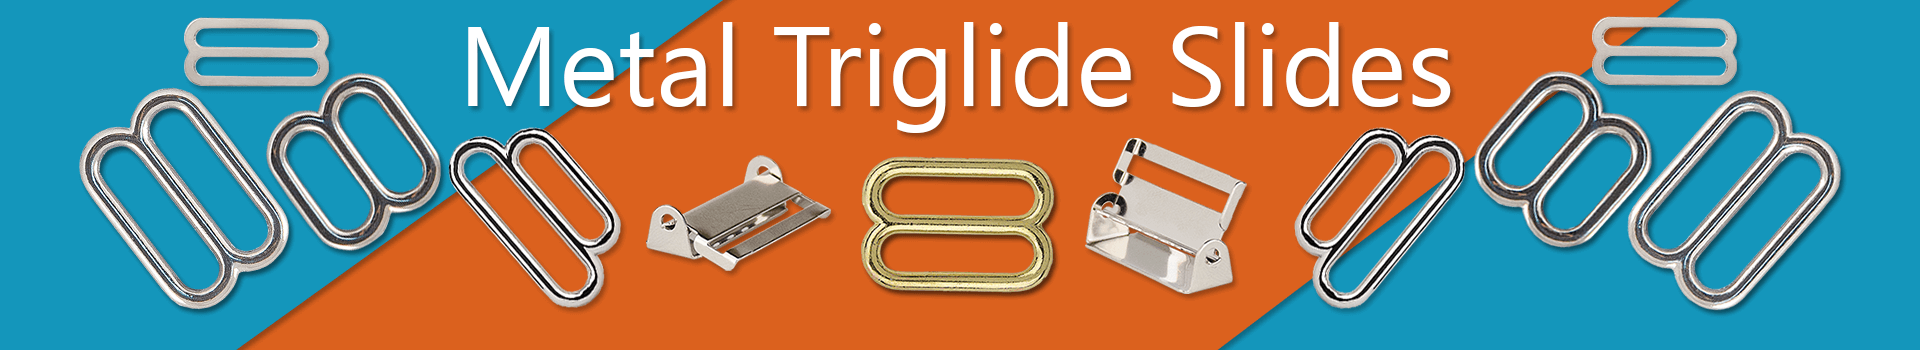 Metal Triglide Slides